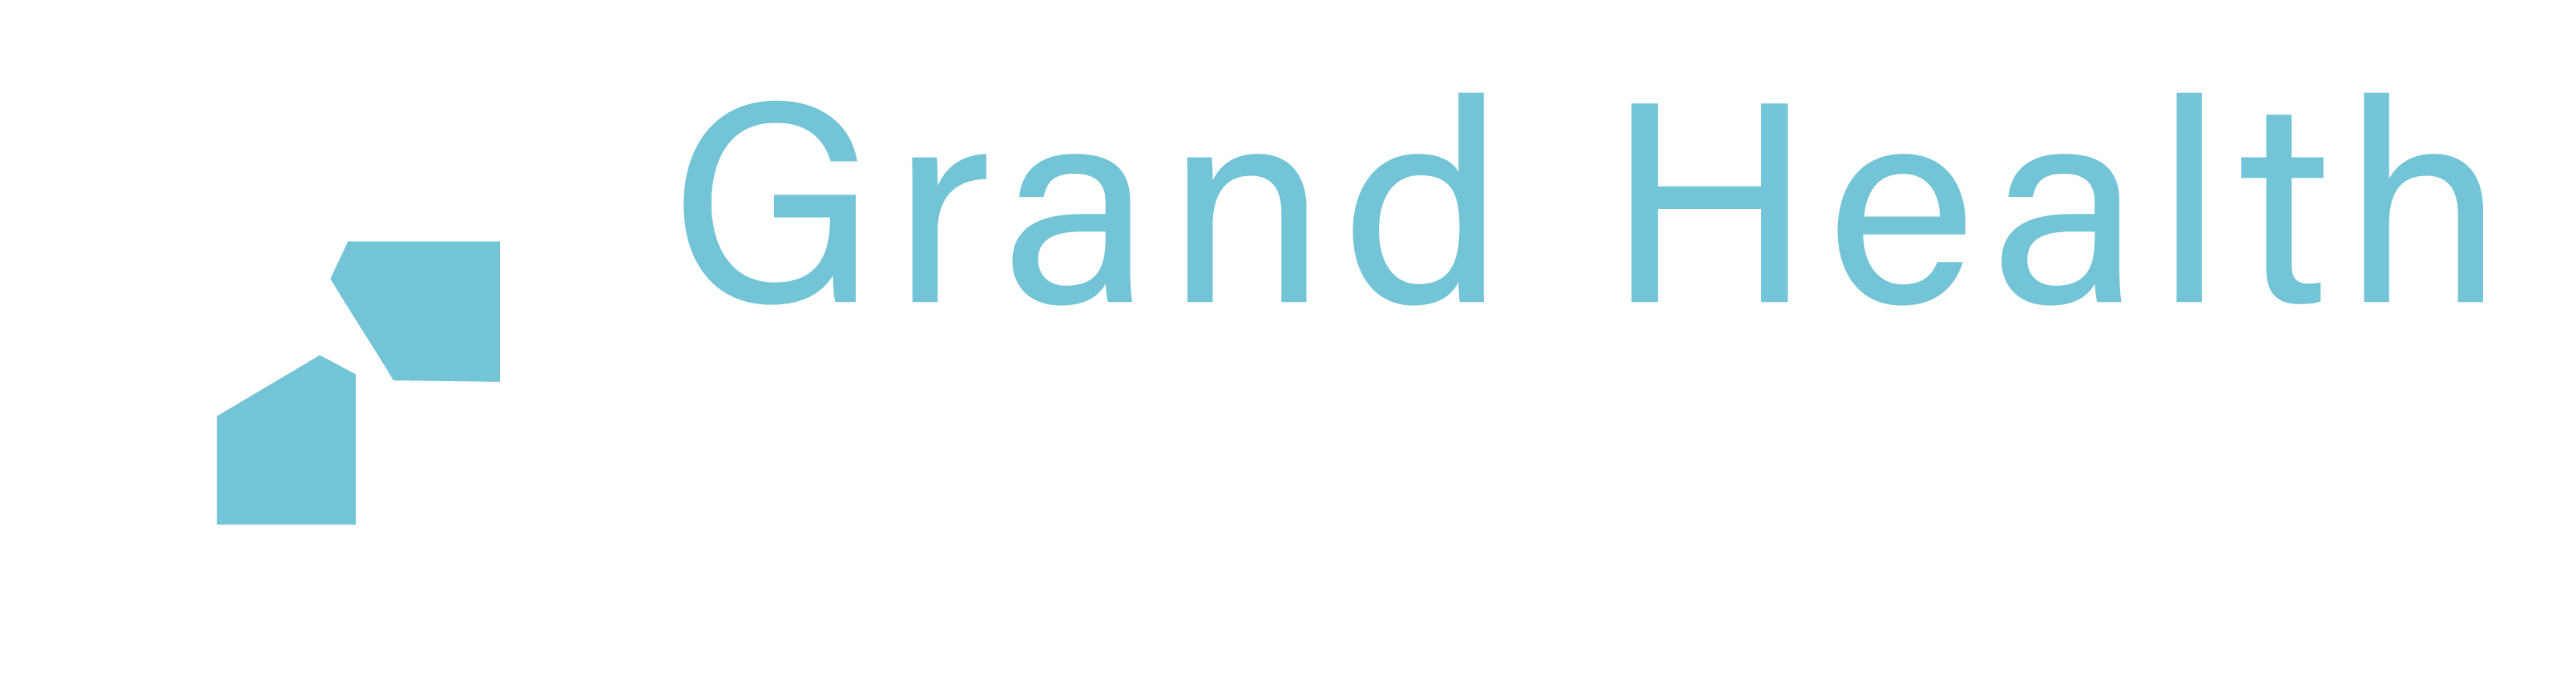 Grand Health Logo Long REV